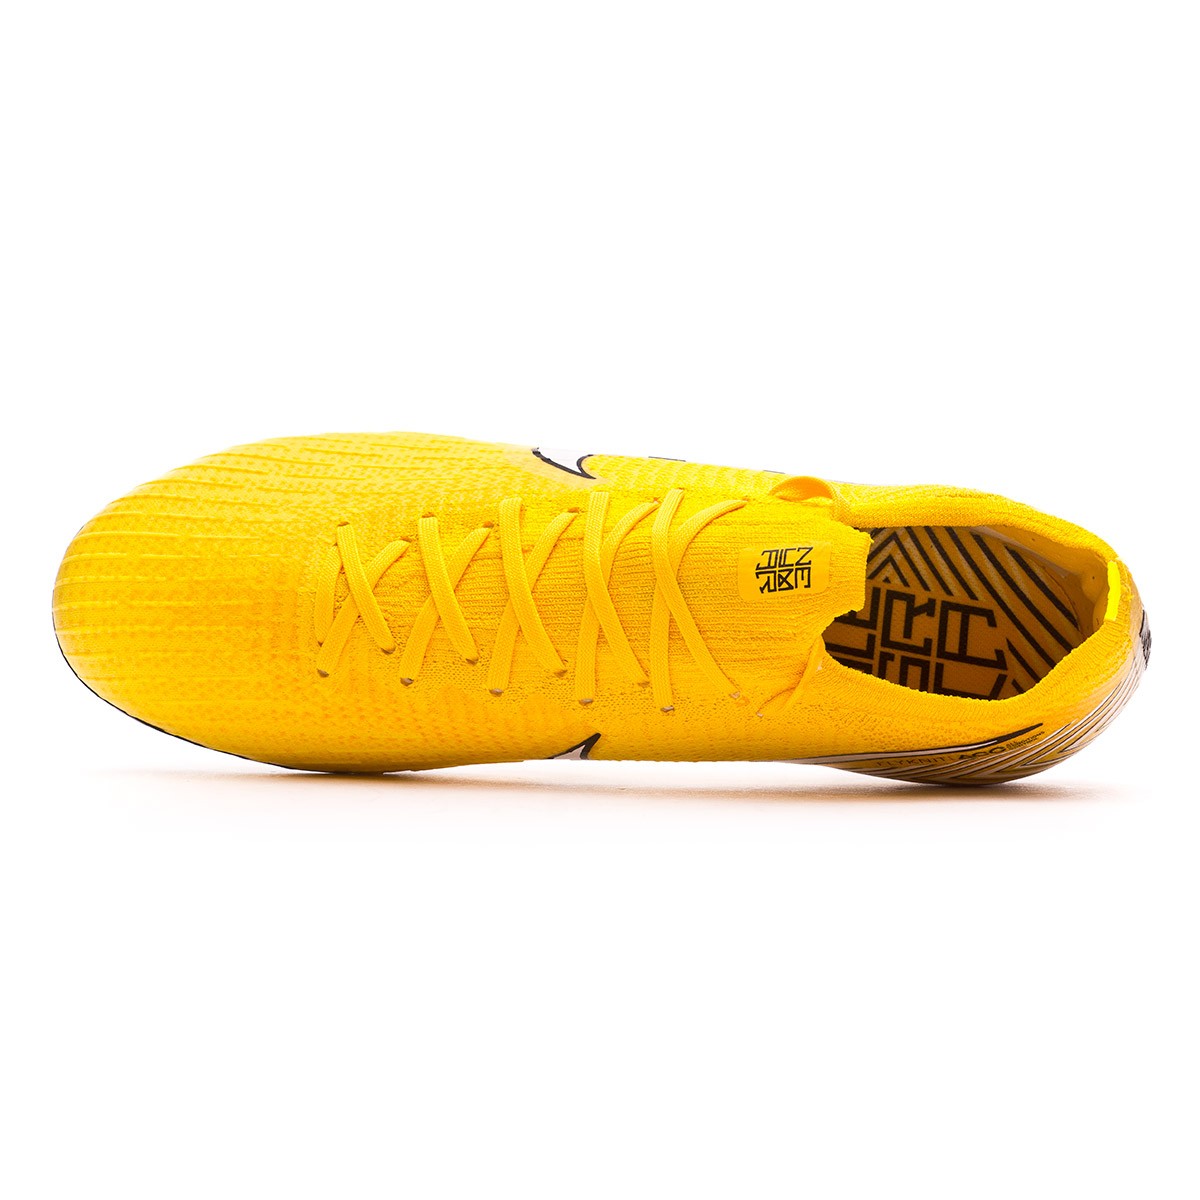 neymar boots yellow